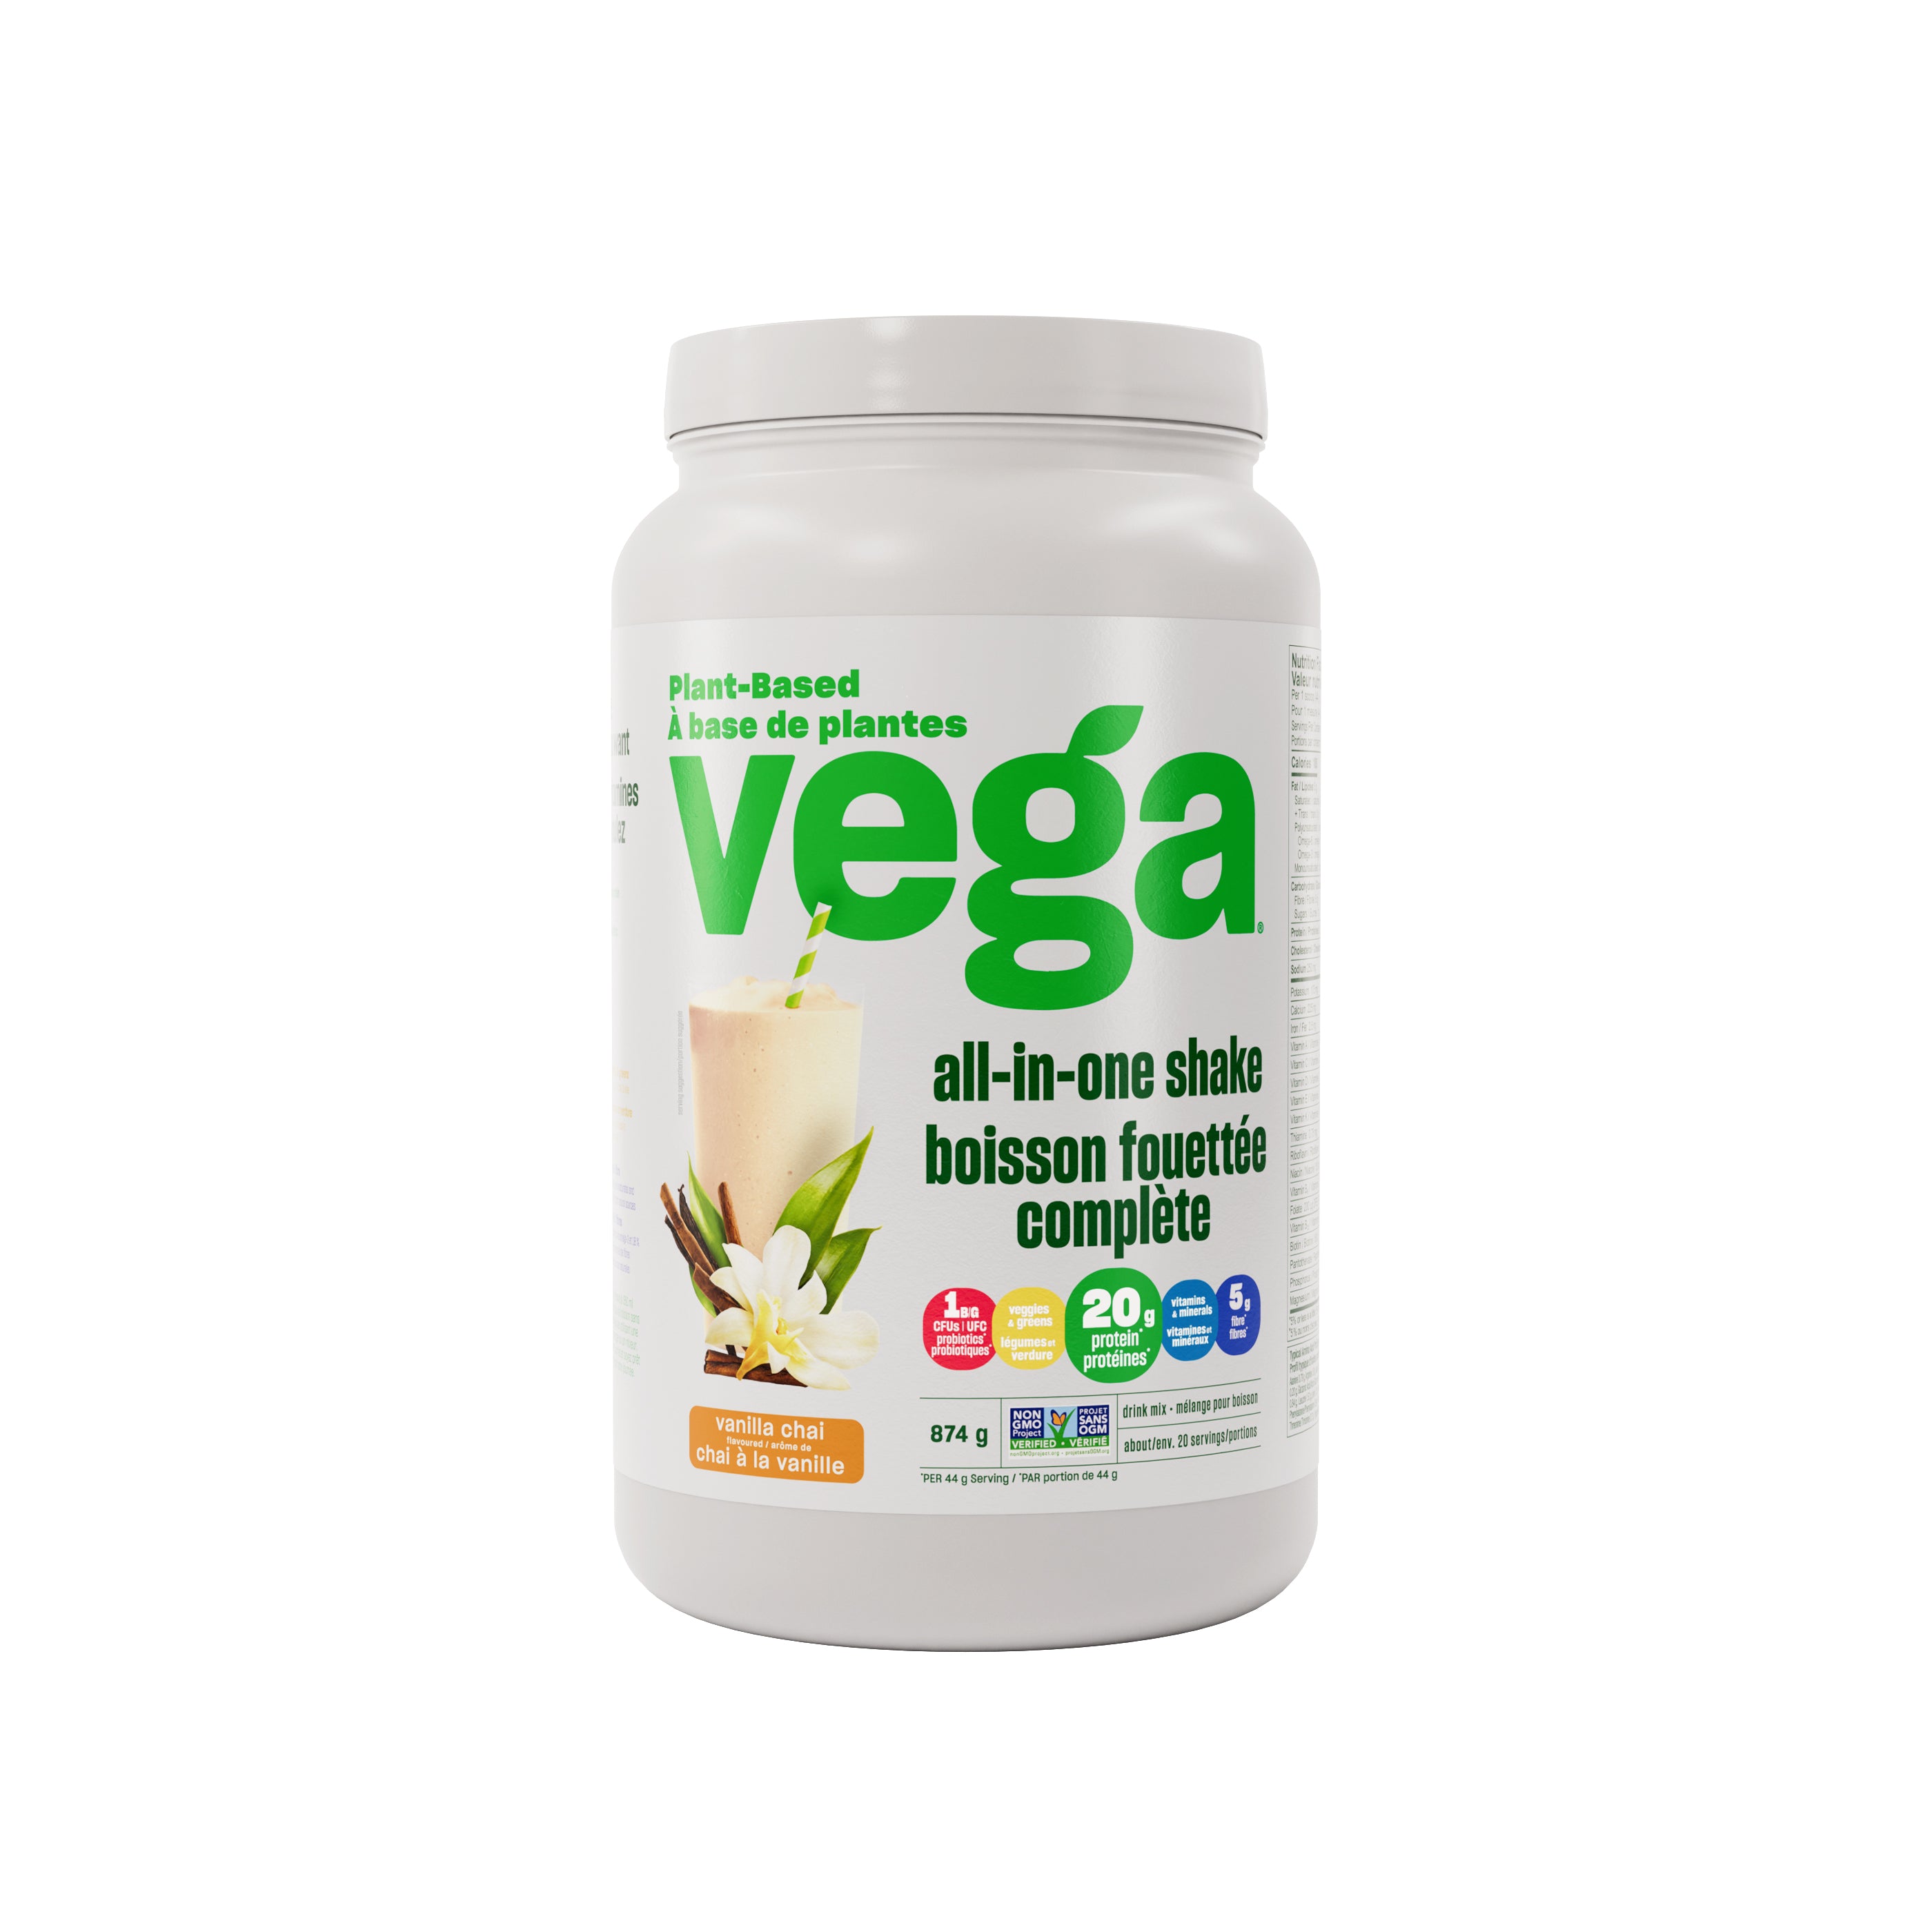 Vega One All in One Shake - Vanilla Chai (874g) - Lifestyle Markets